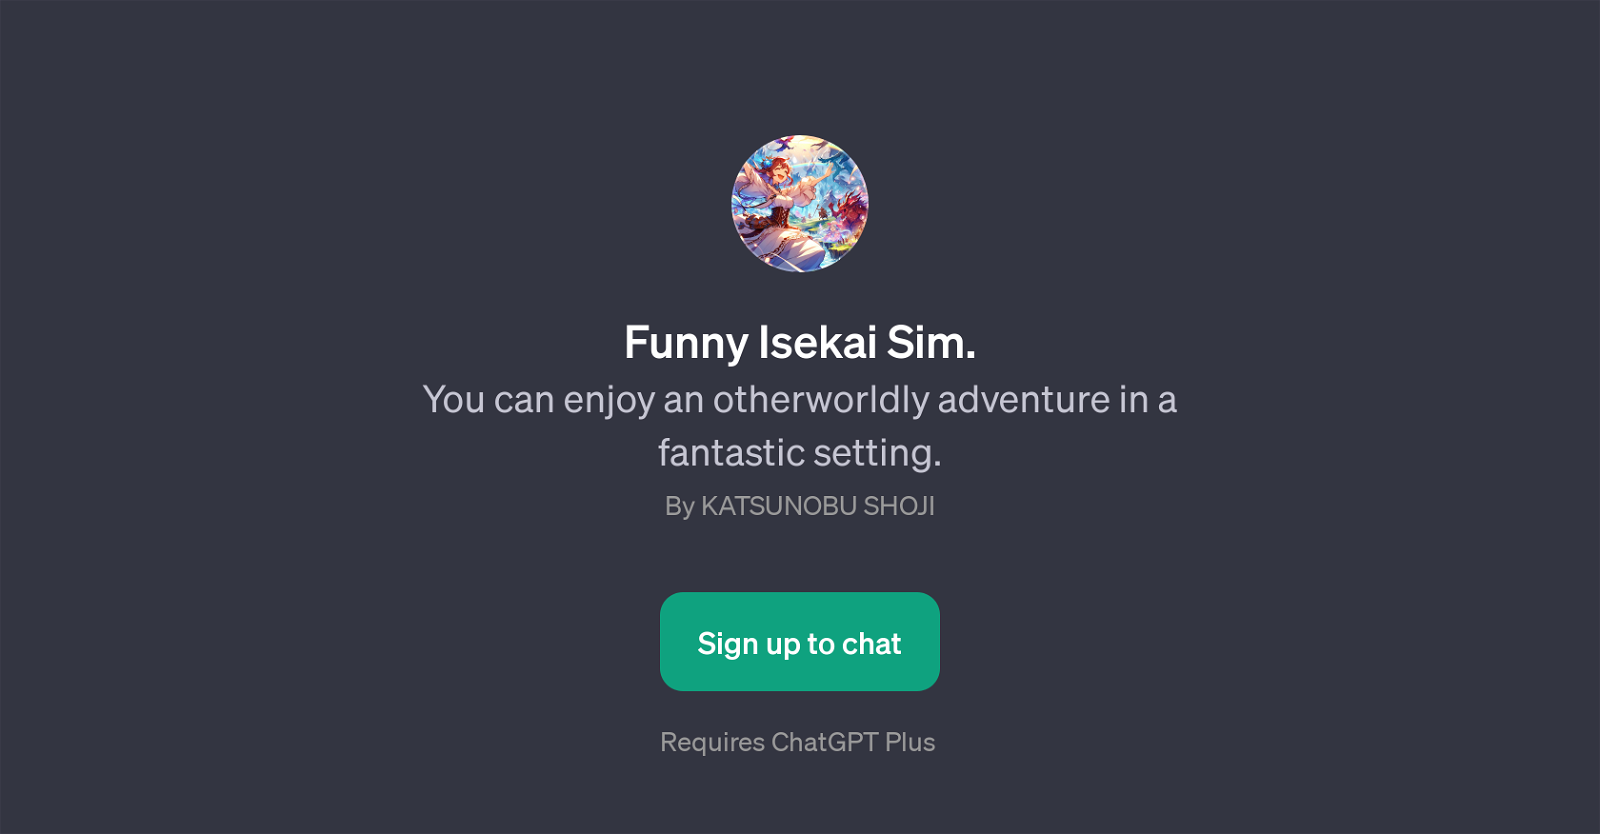 Funny Isekai Sim website